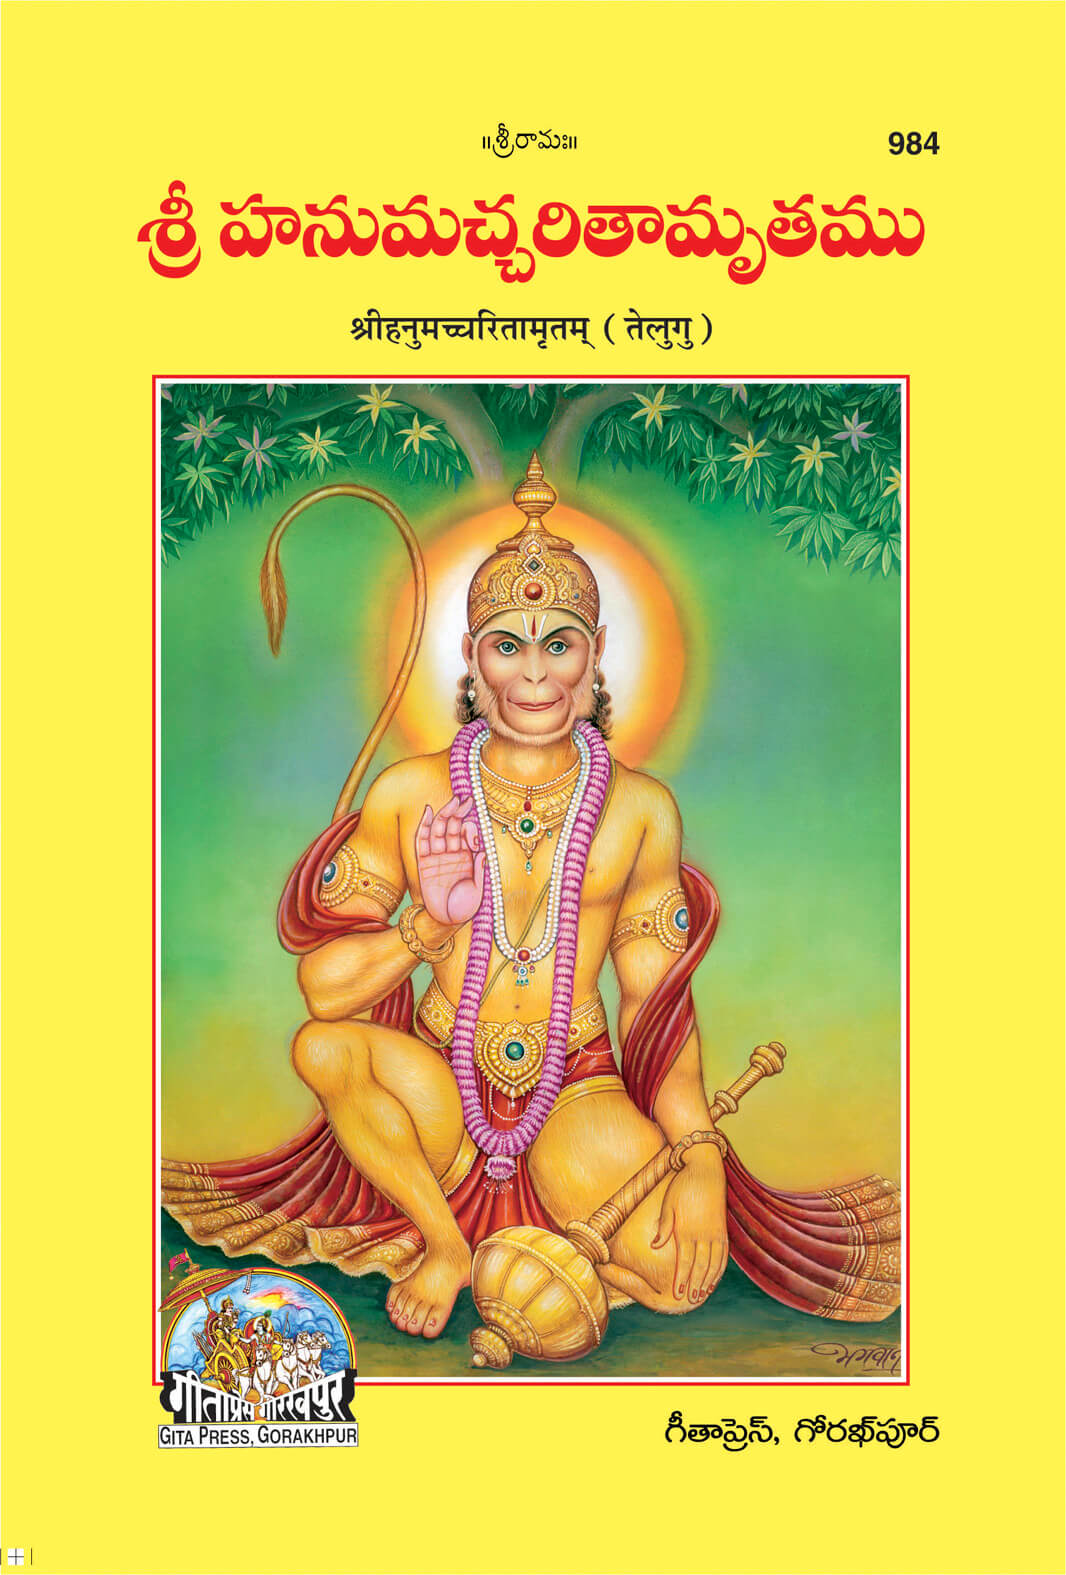 Shri Hanumchcharitamritam (Telugu) by Gita Press